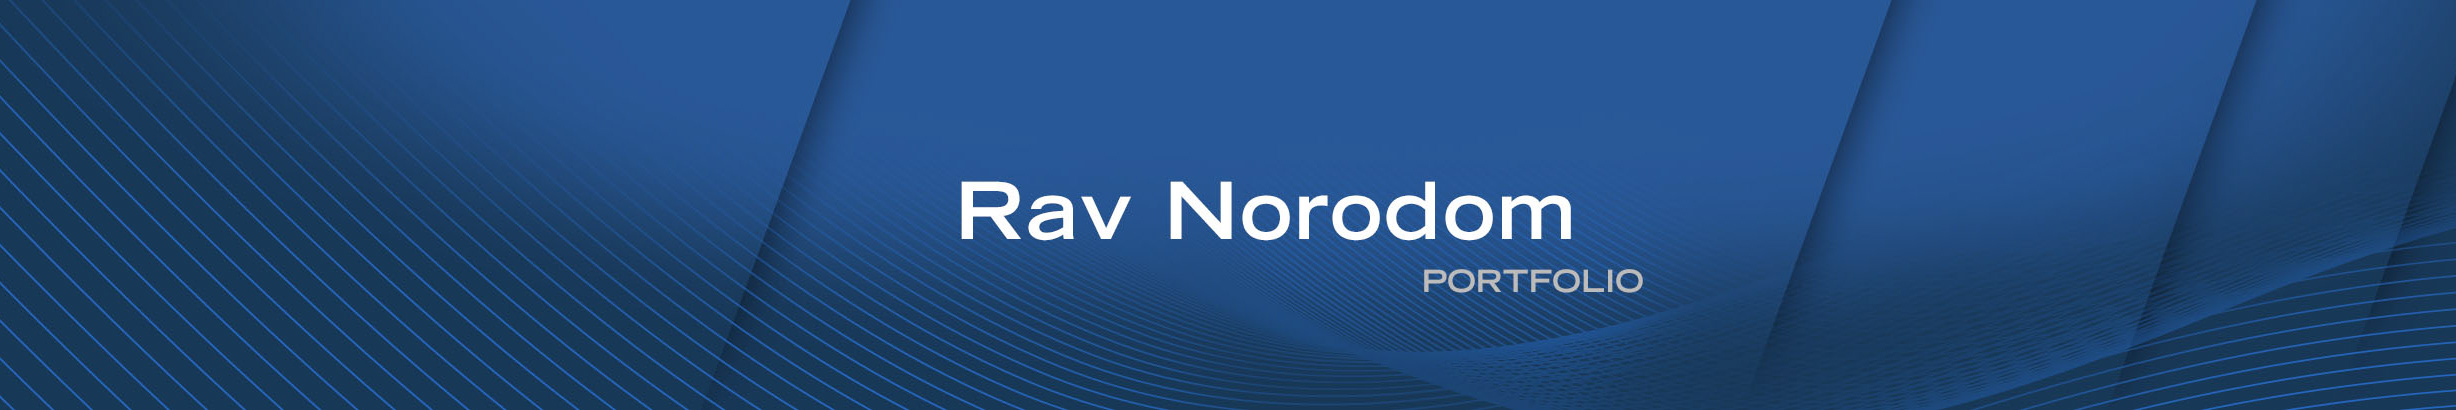 Баннер профиля Rav Norodom